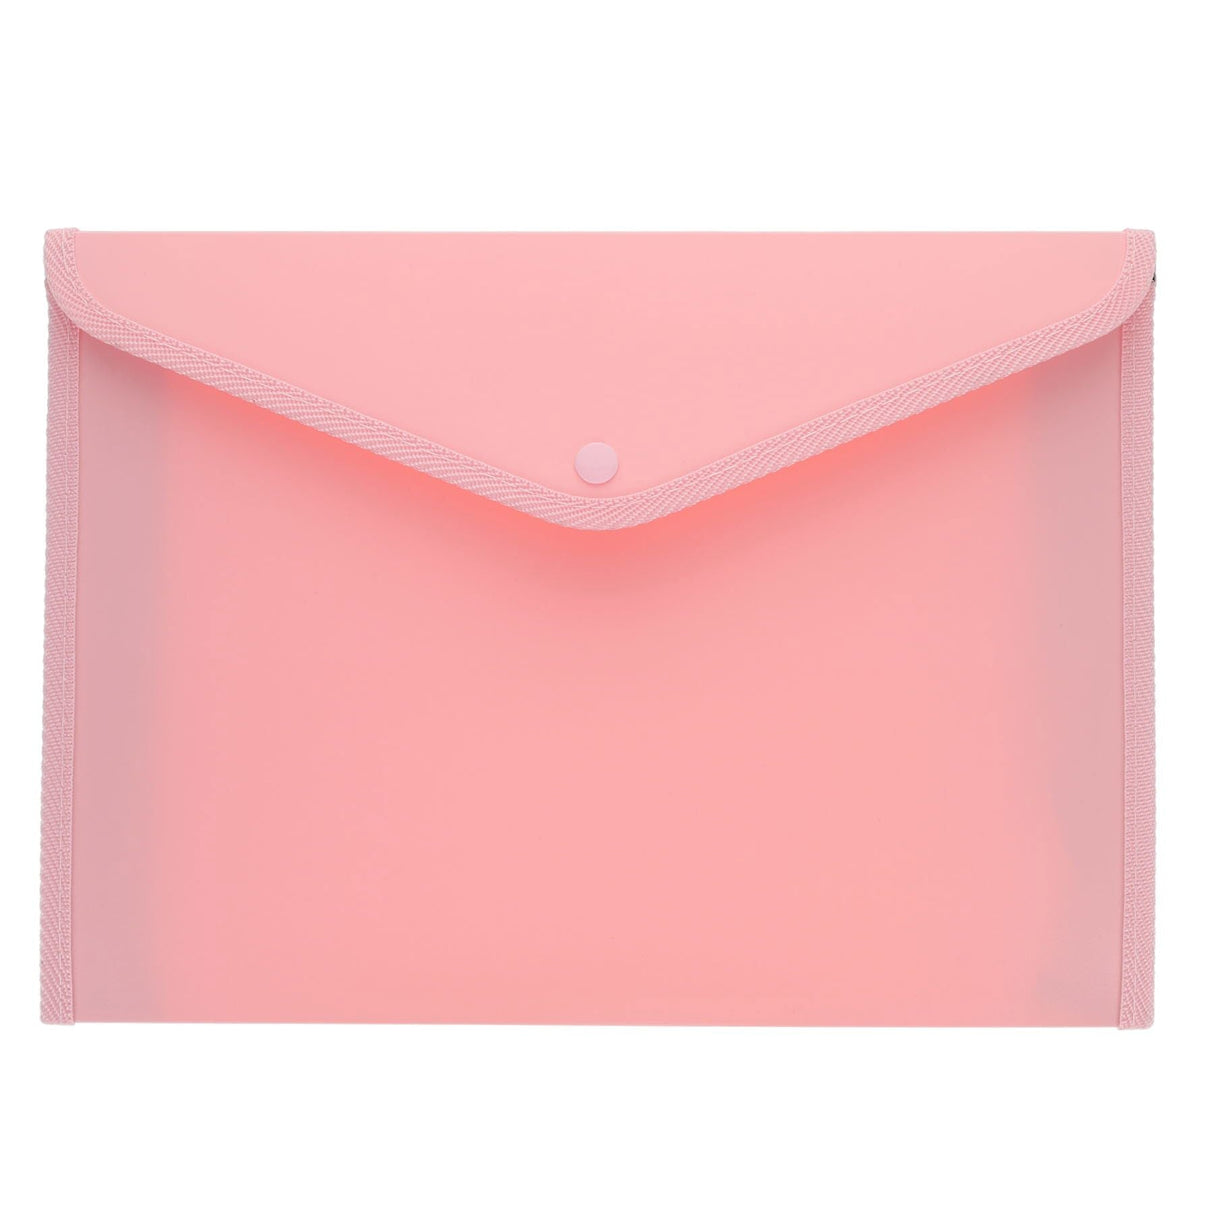 Premto Pastel A4+ Button Wallet - Pink Sherbet | Stationery Shop UK